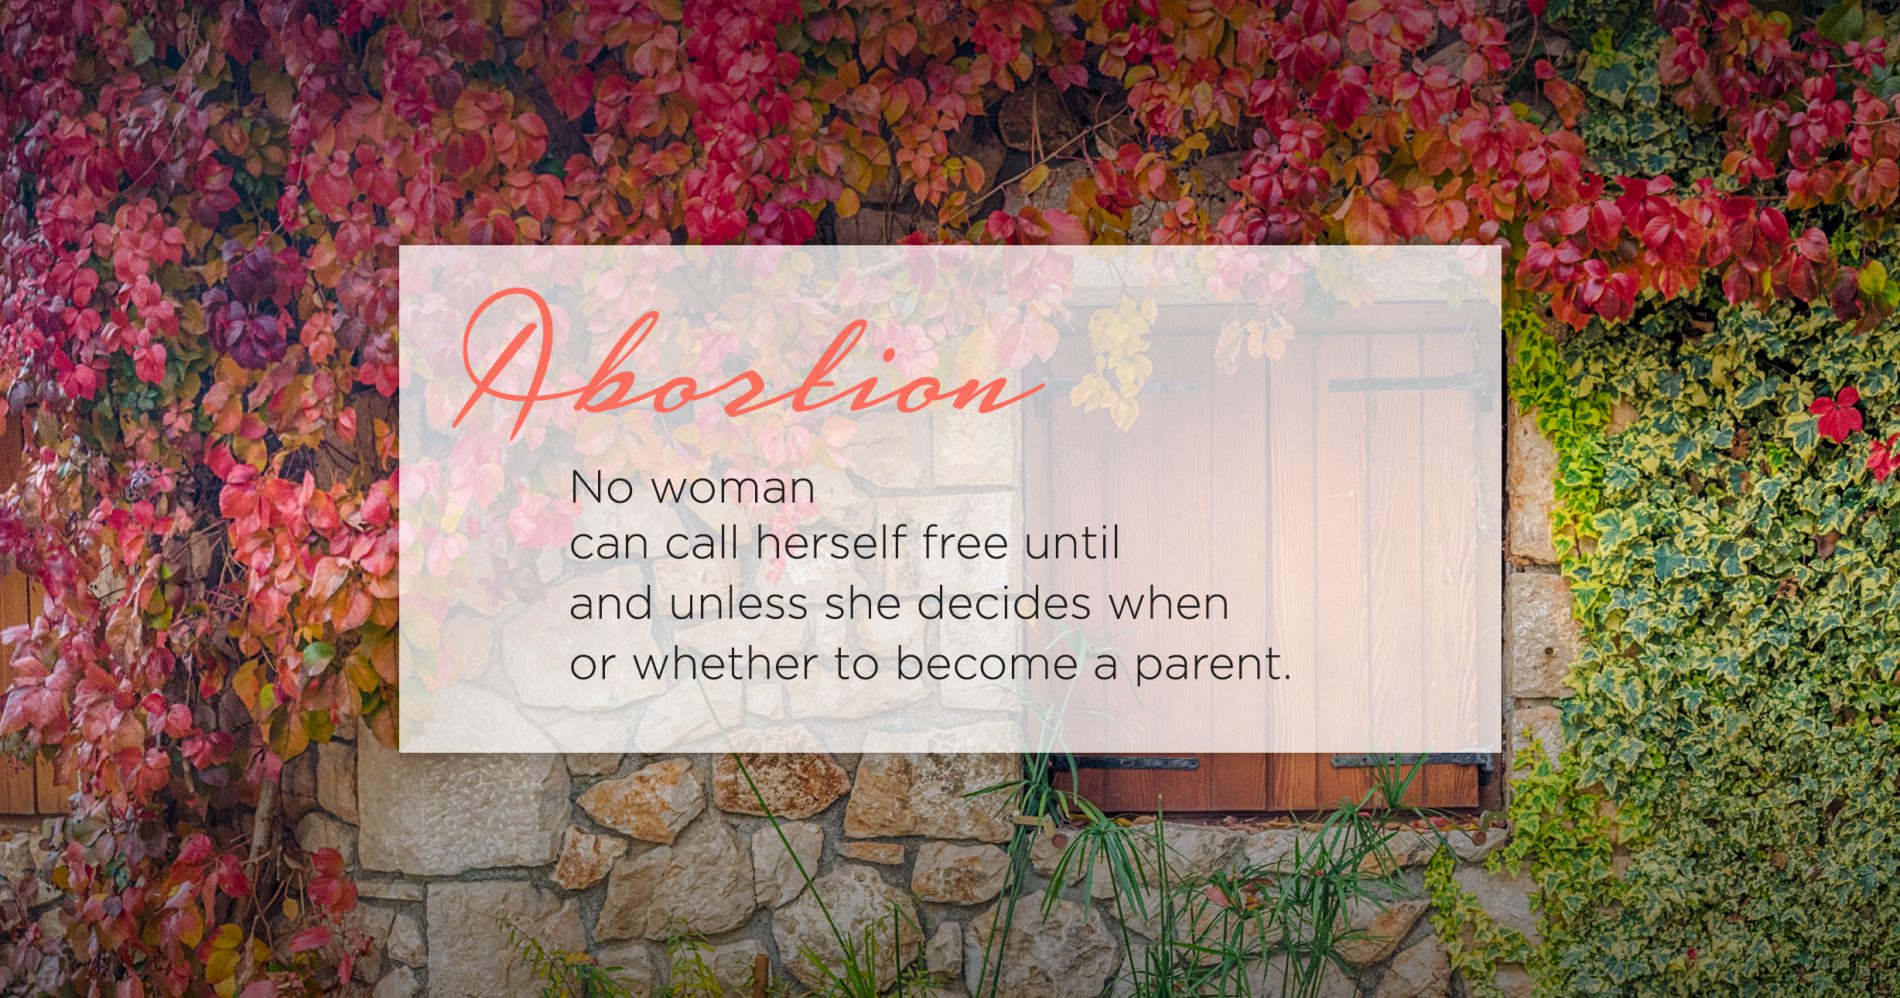 Abortion clinics VA - Bristol Women's Health abortion clinic in Bristol, Virginia